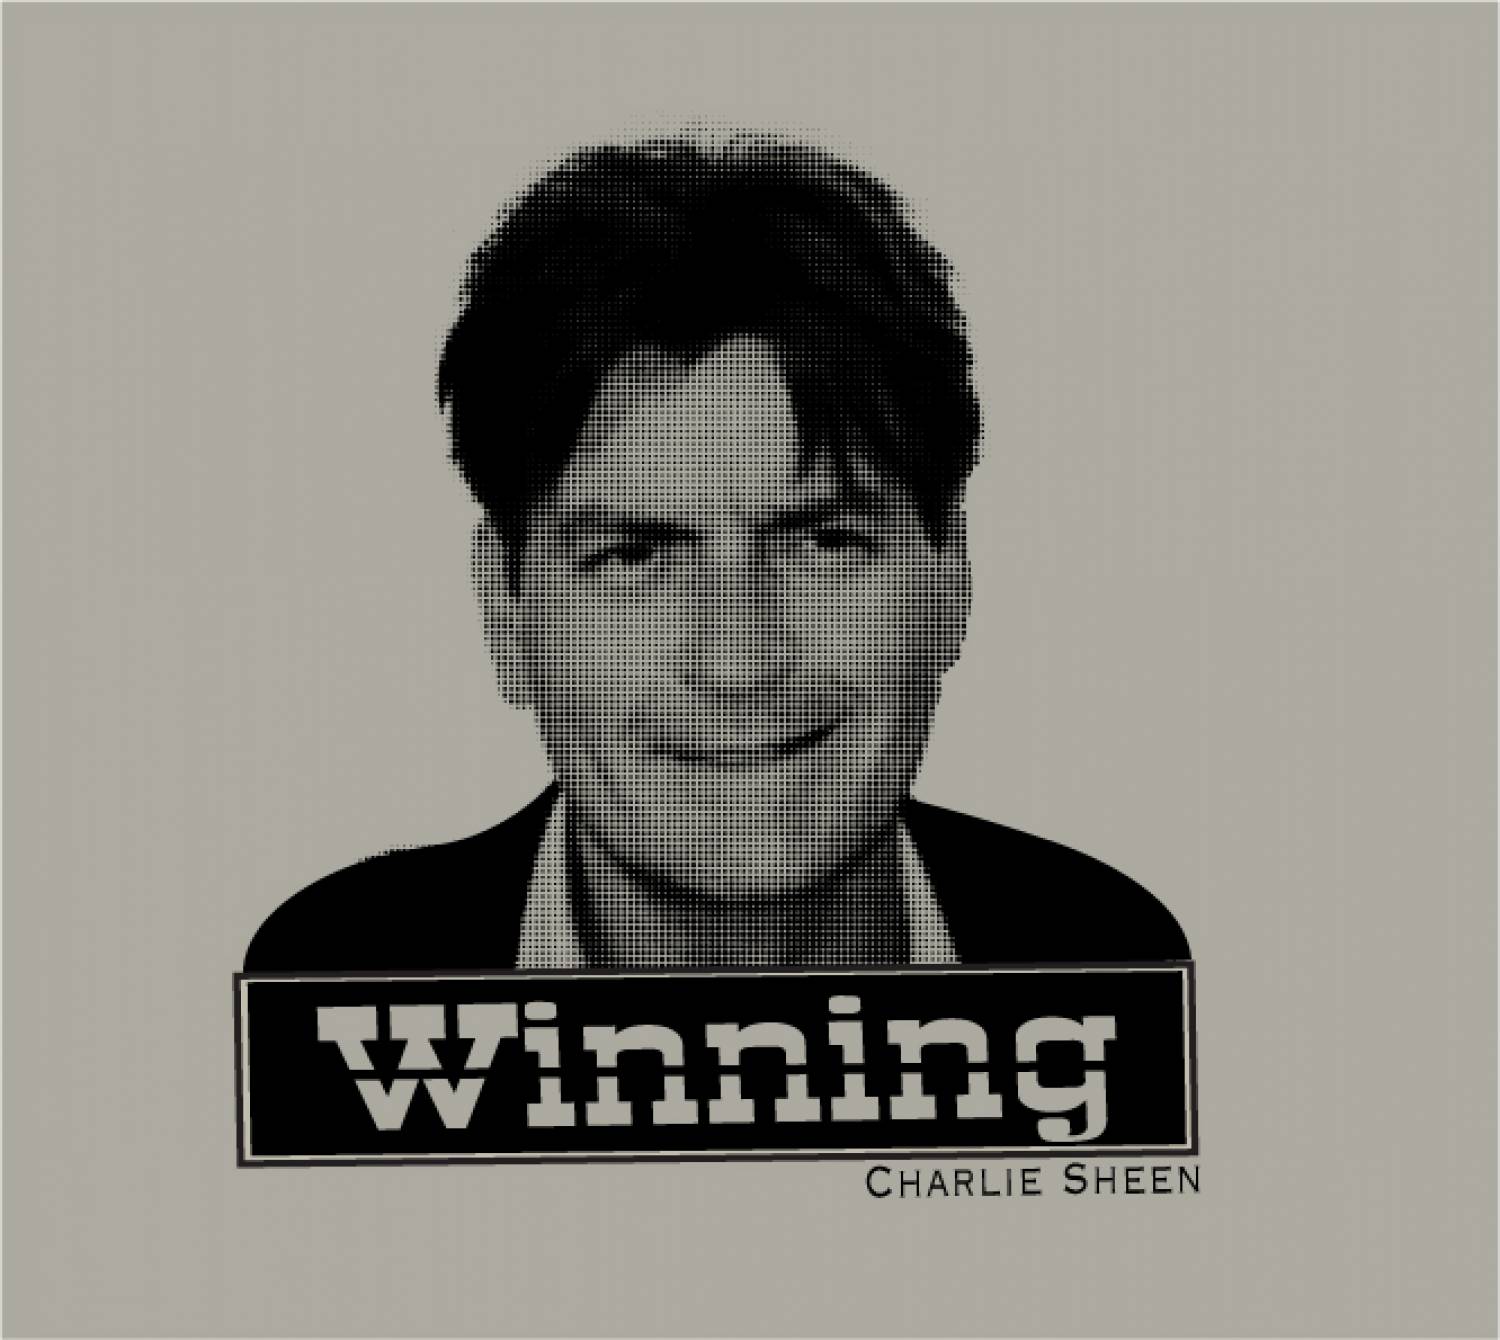 Full HD Charlie Sheen Wallpaper, Charlie Sheen Wallpaper